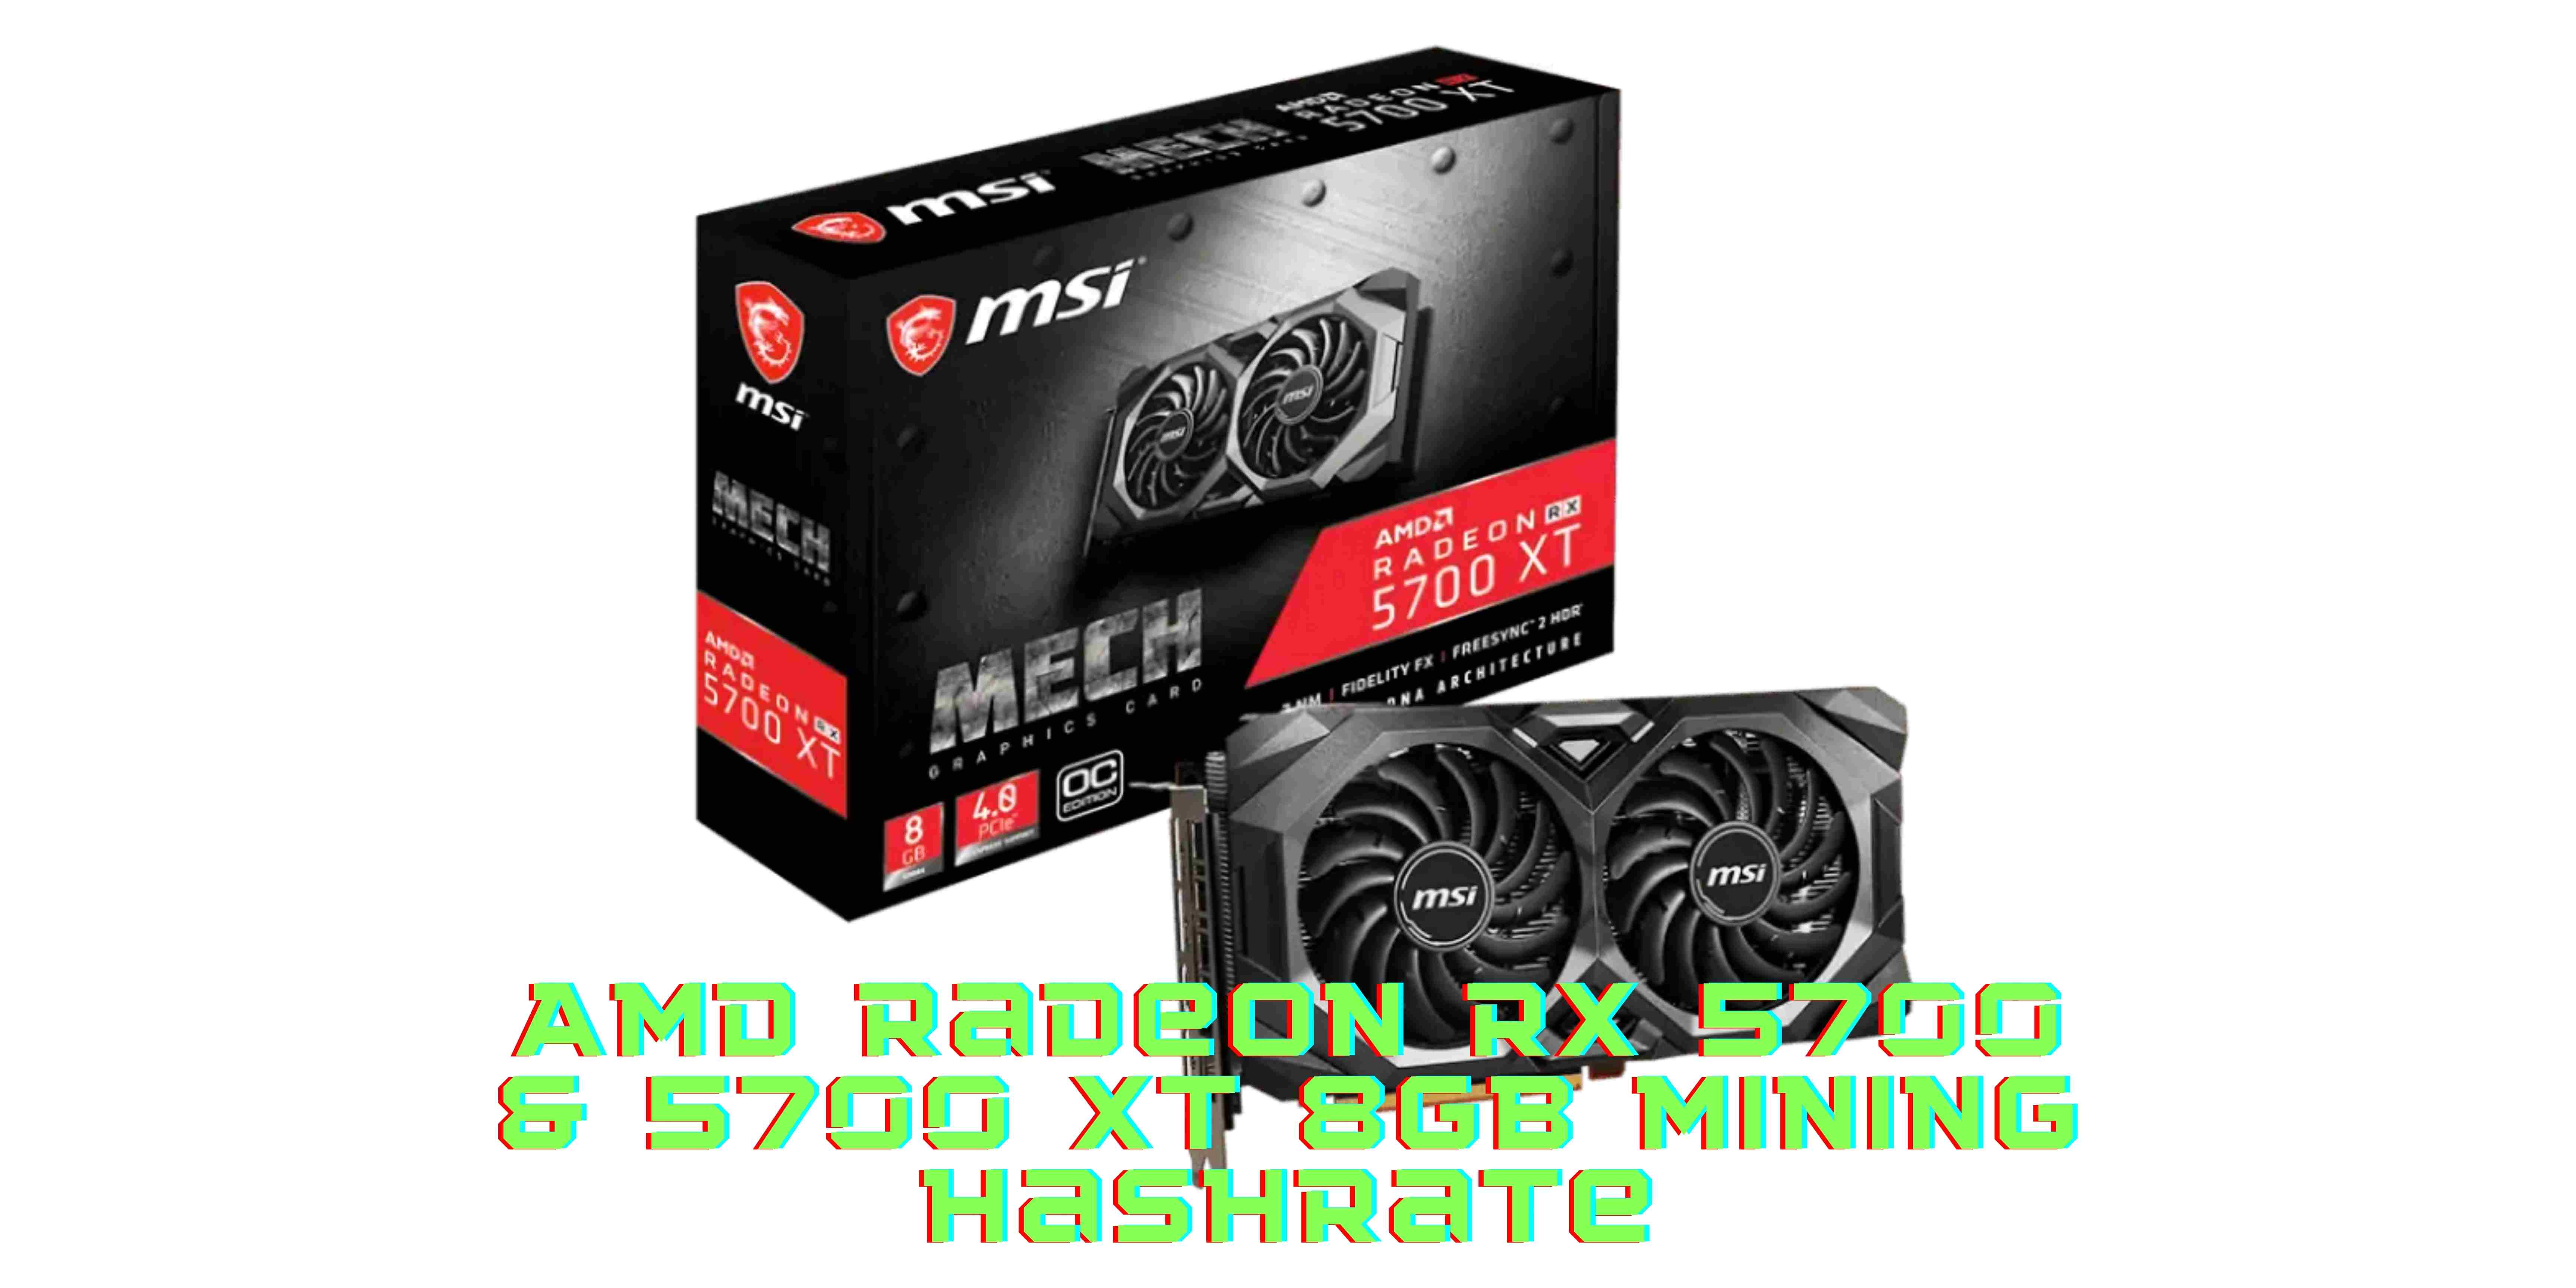 Best Runner-up GPU For Crypto Mining—AMD Radeon RX 5700 XT Mining Hashrate